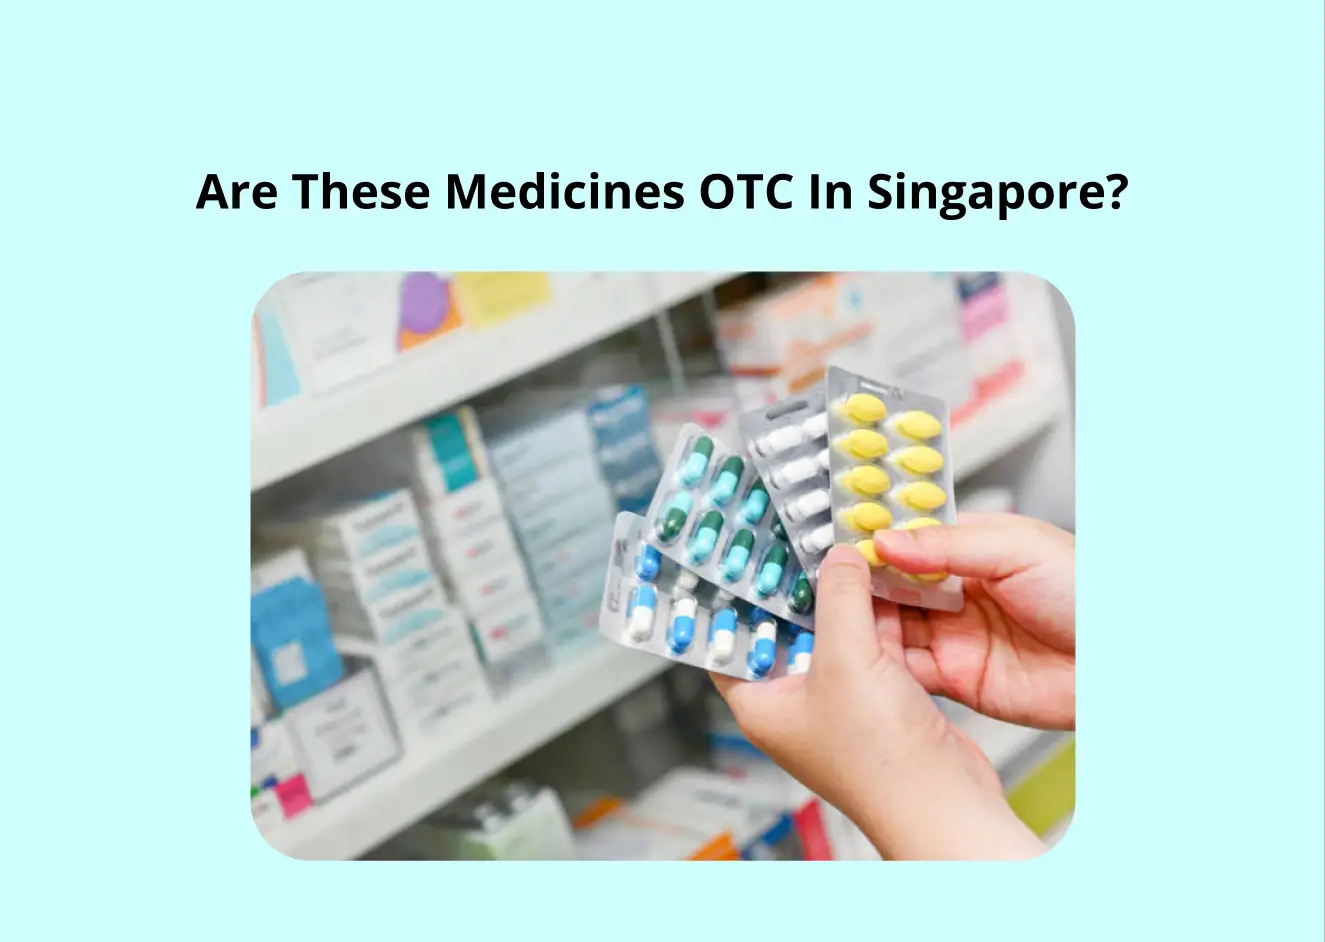 Are These OTC Medicines In Singapore